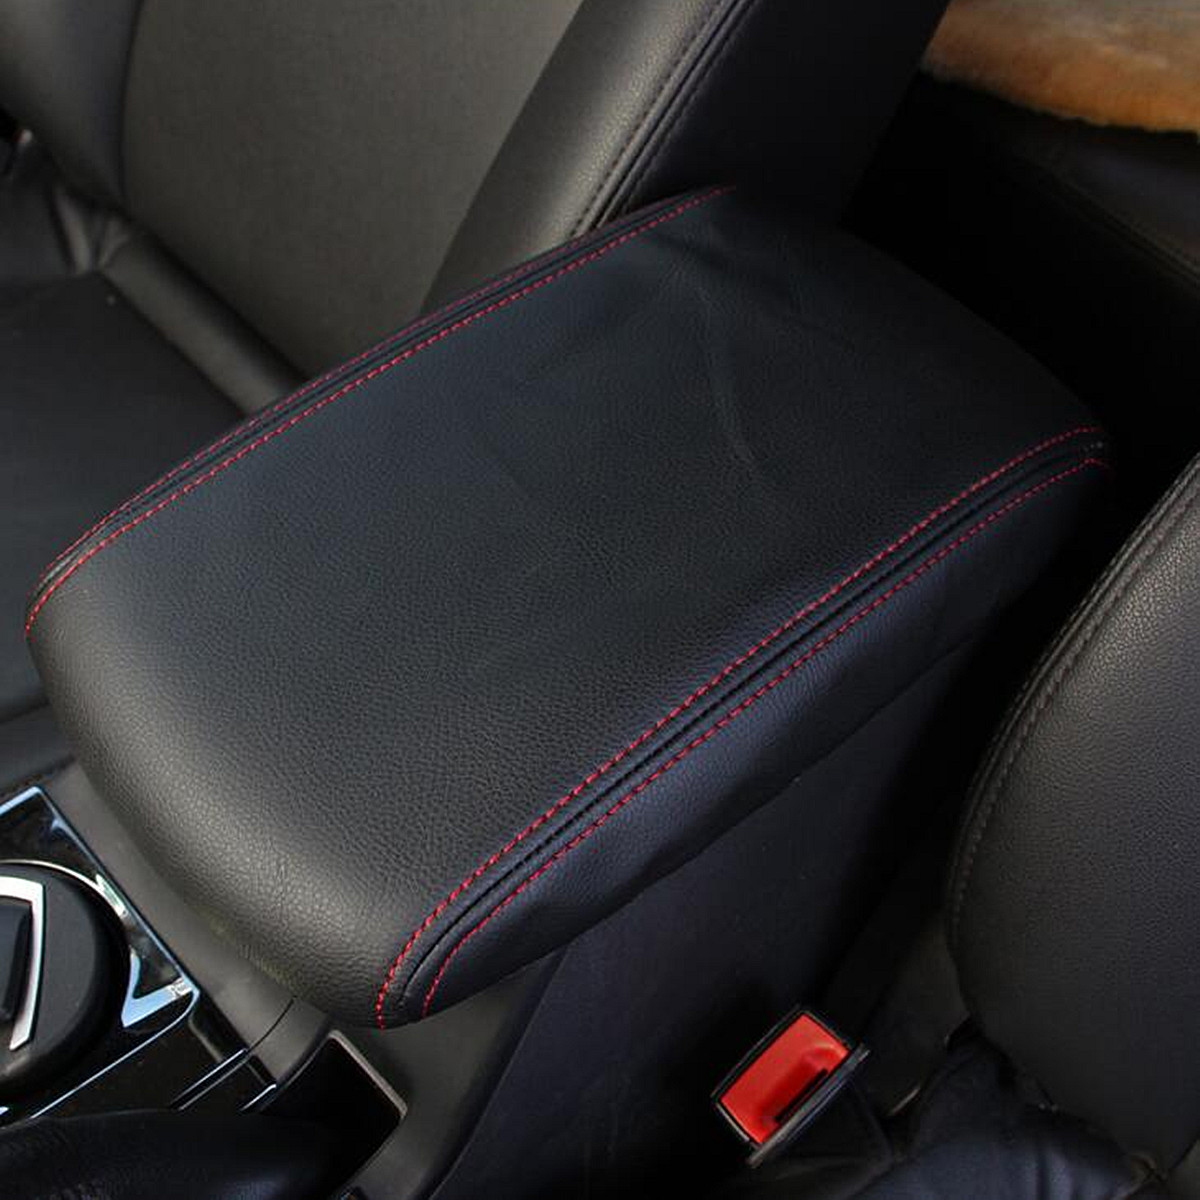 

Microfiber Leather Авто Центральная консольная консоль для подушек безопасности для Toyota Highlander 2008-2013